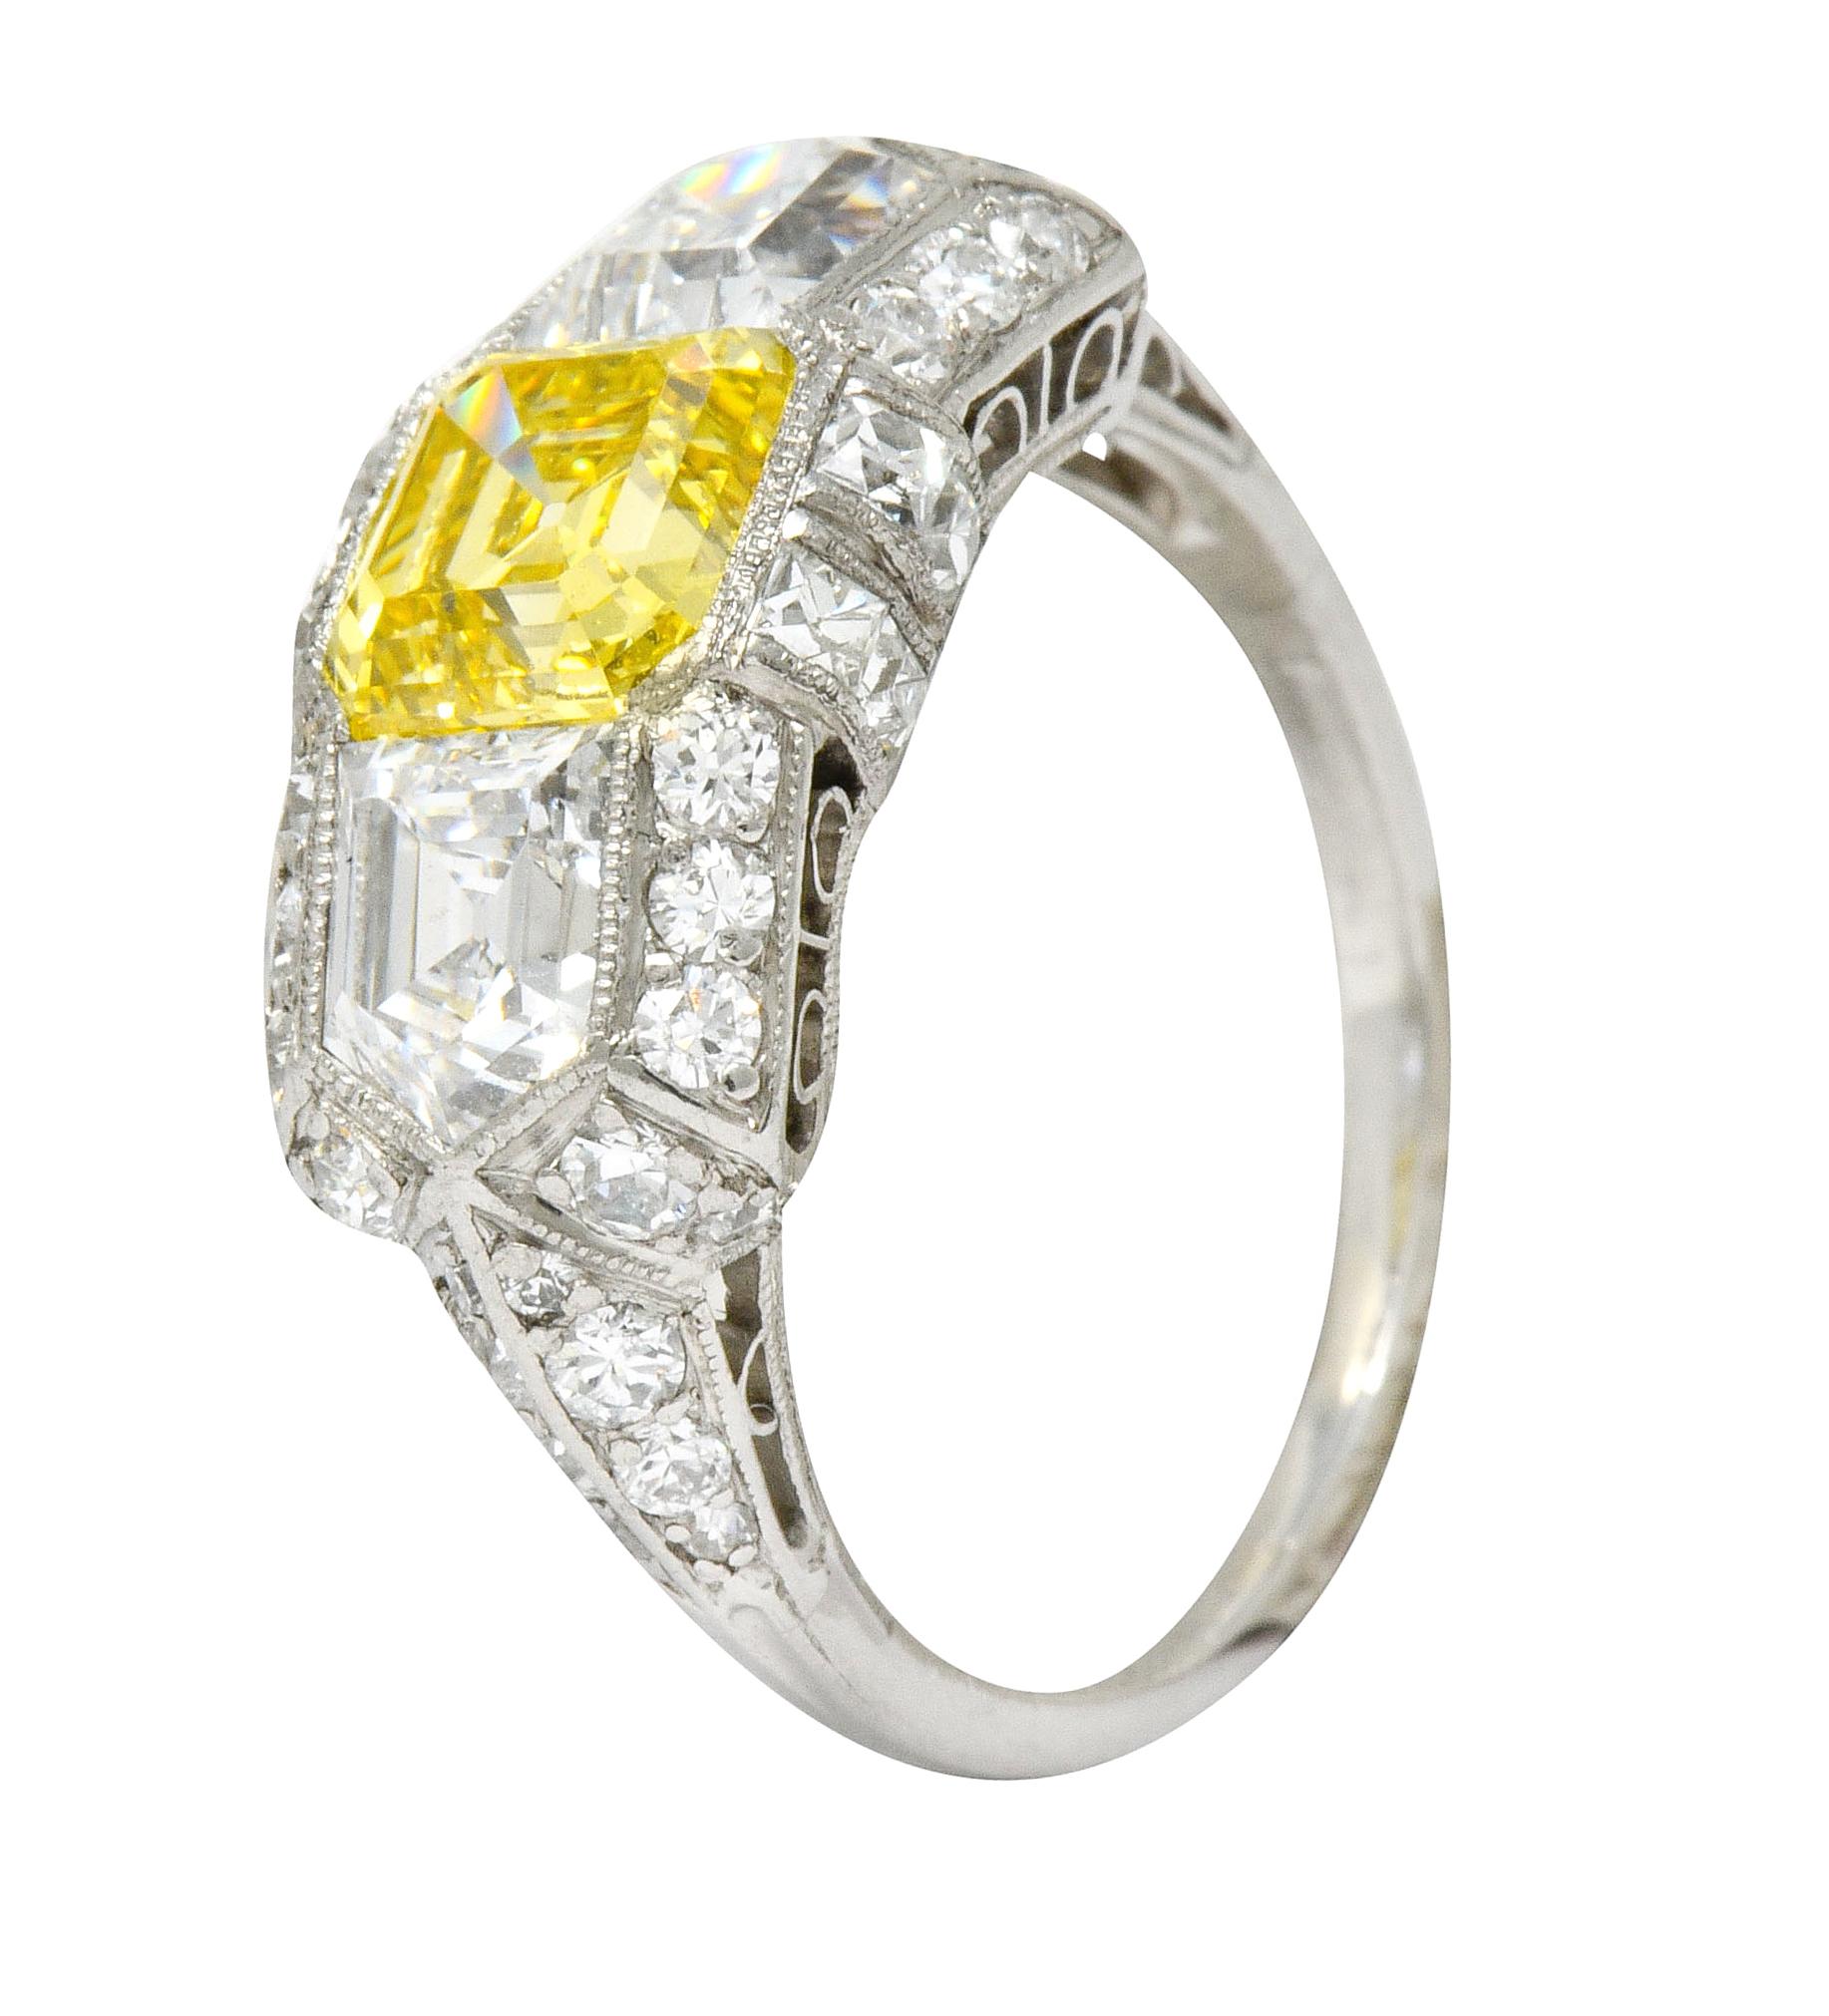 Tiffany & Co. Art Deco Fancy Vivid Yellow Diamond Platinum Cocktail Ring GIA 3